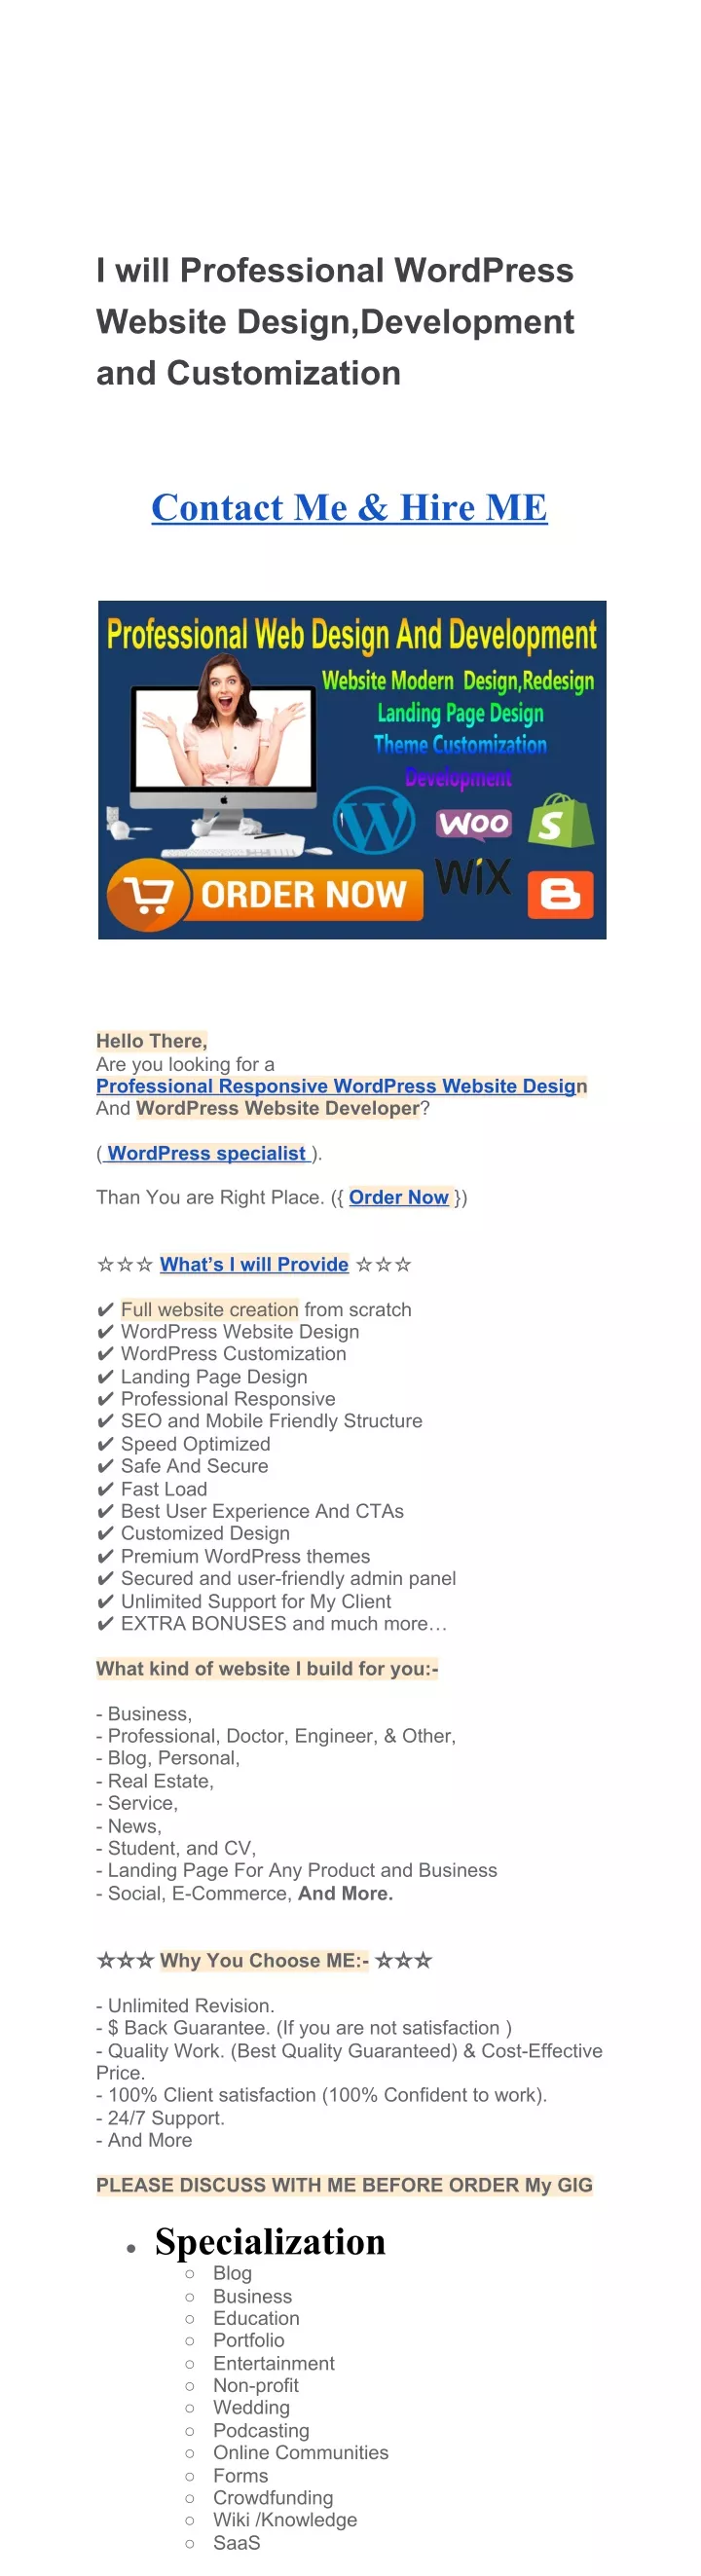 i will professional wordpress website design